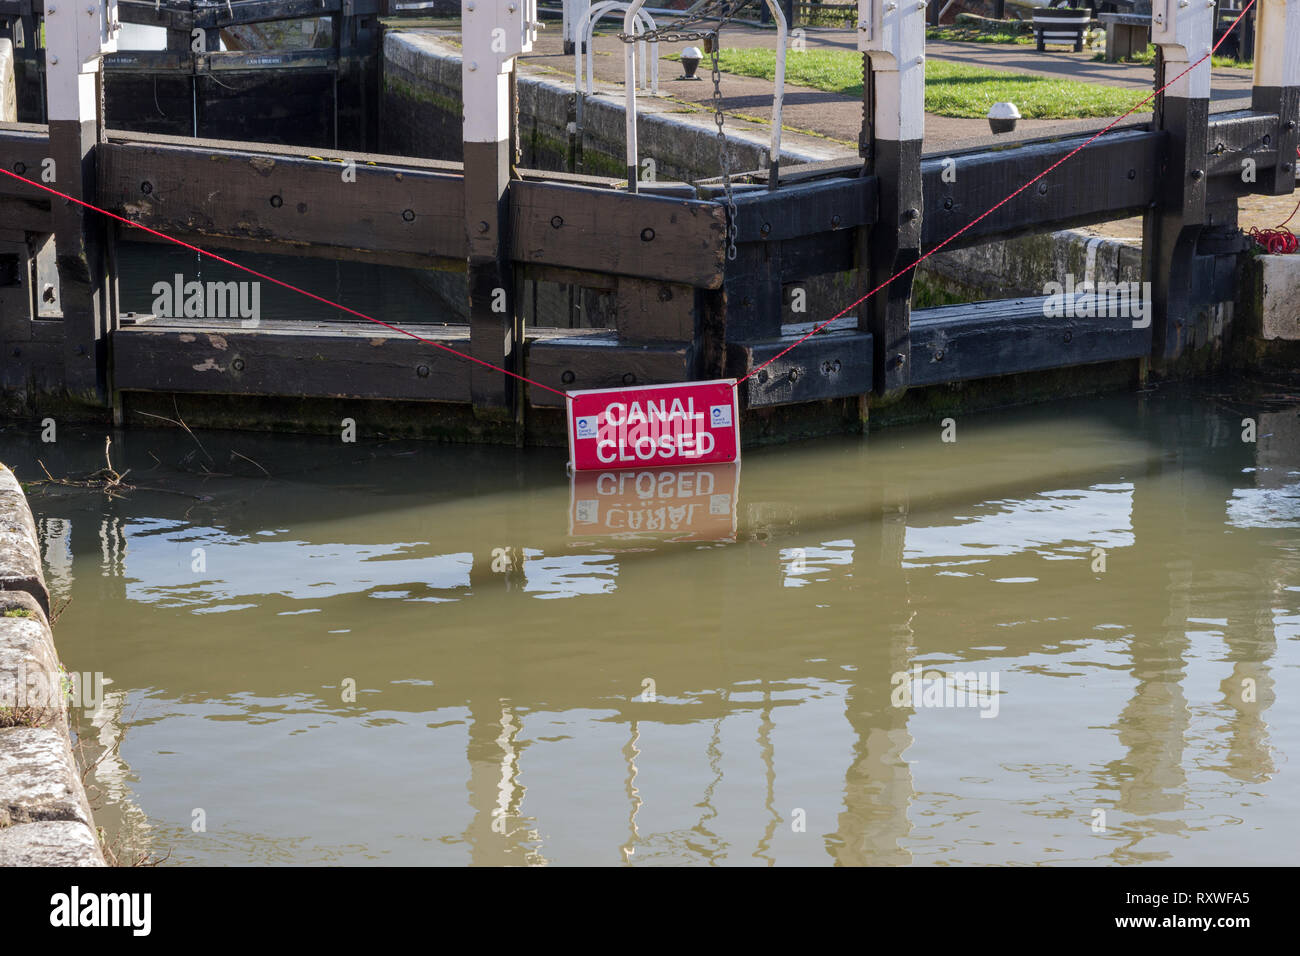 Red canal closed sign hanging on lock gates, Stoke Bruerne, Northamptonshire, UK Stock Photo